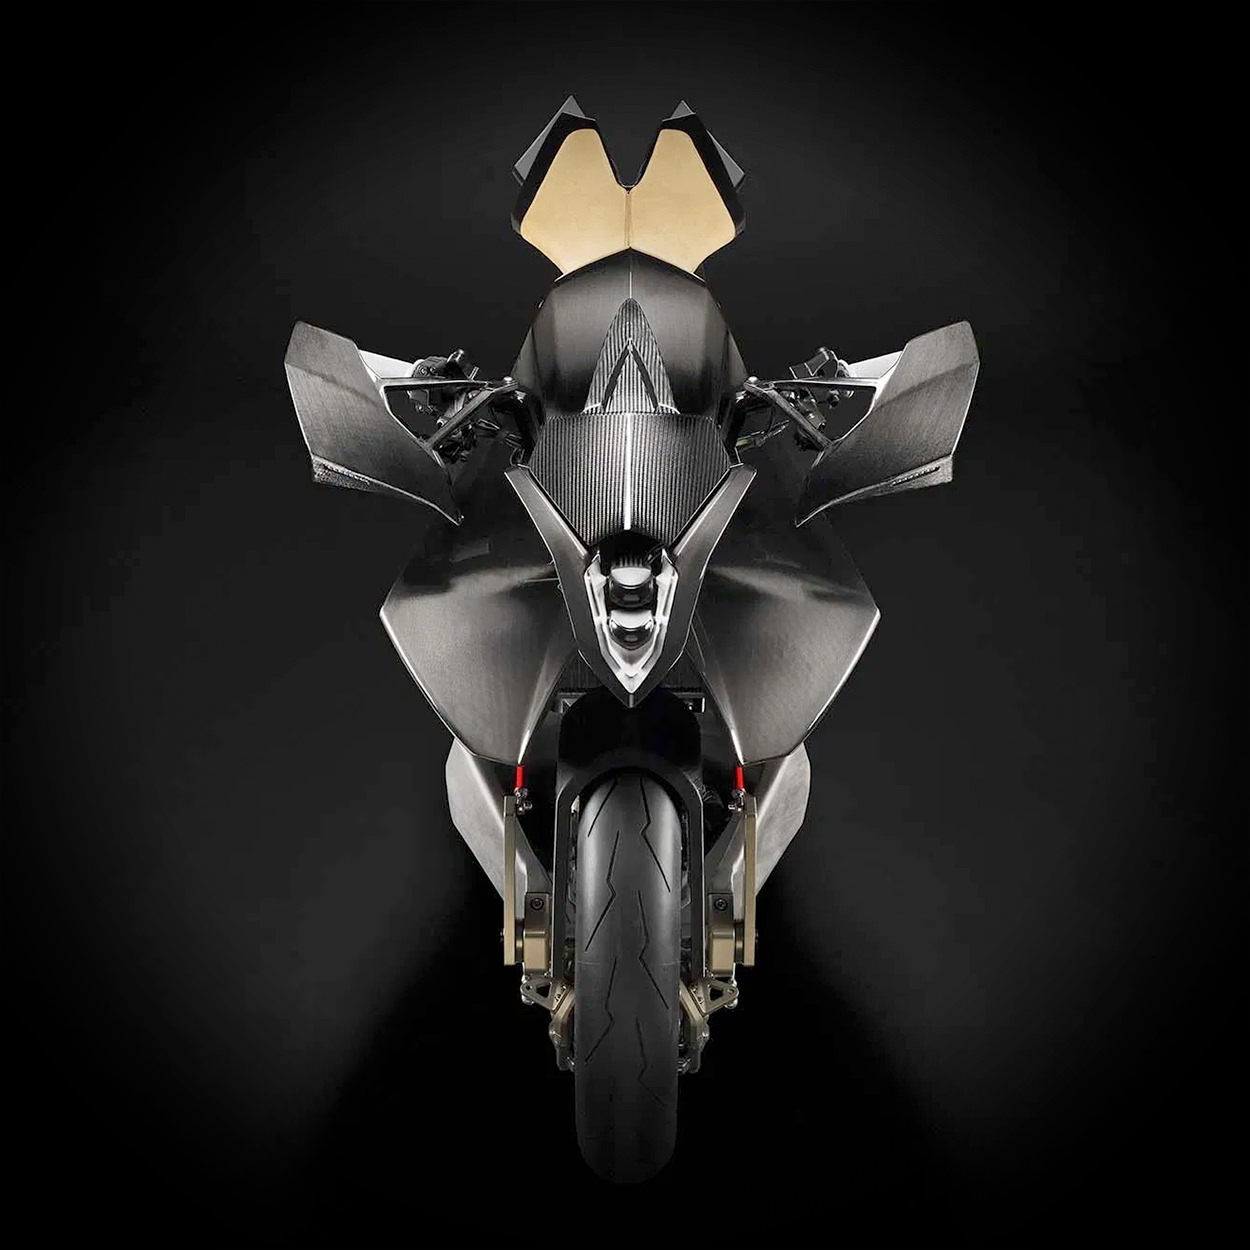 The extreme Vyrus Alyen Ducati-powered superbike